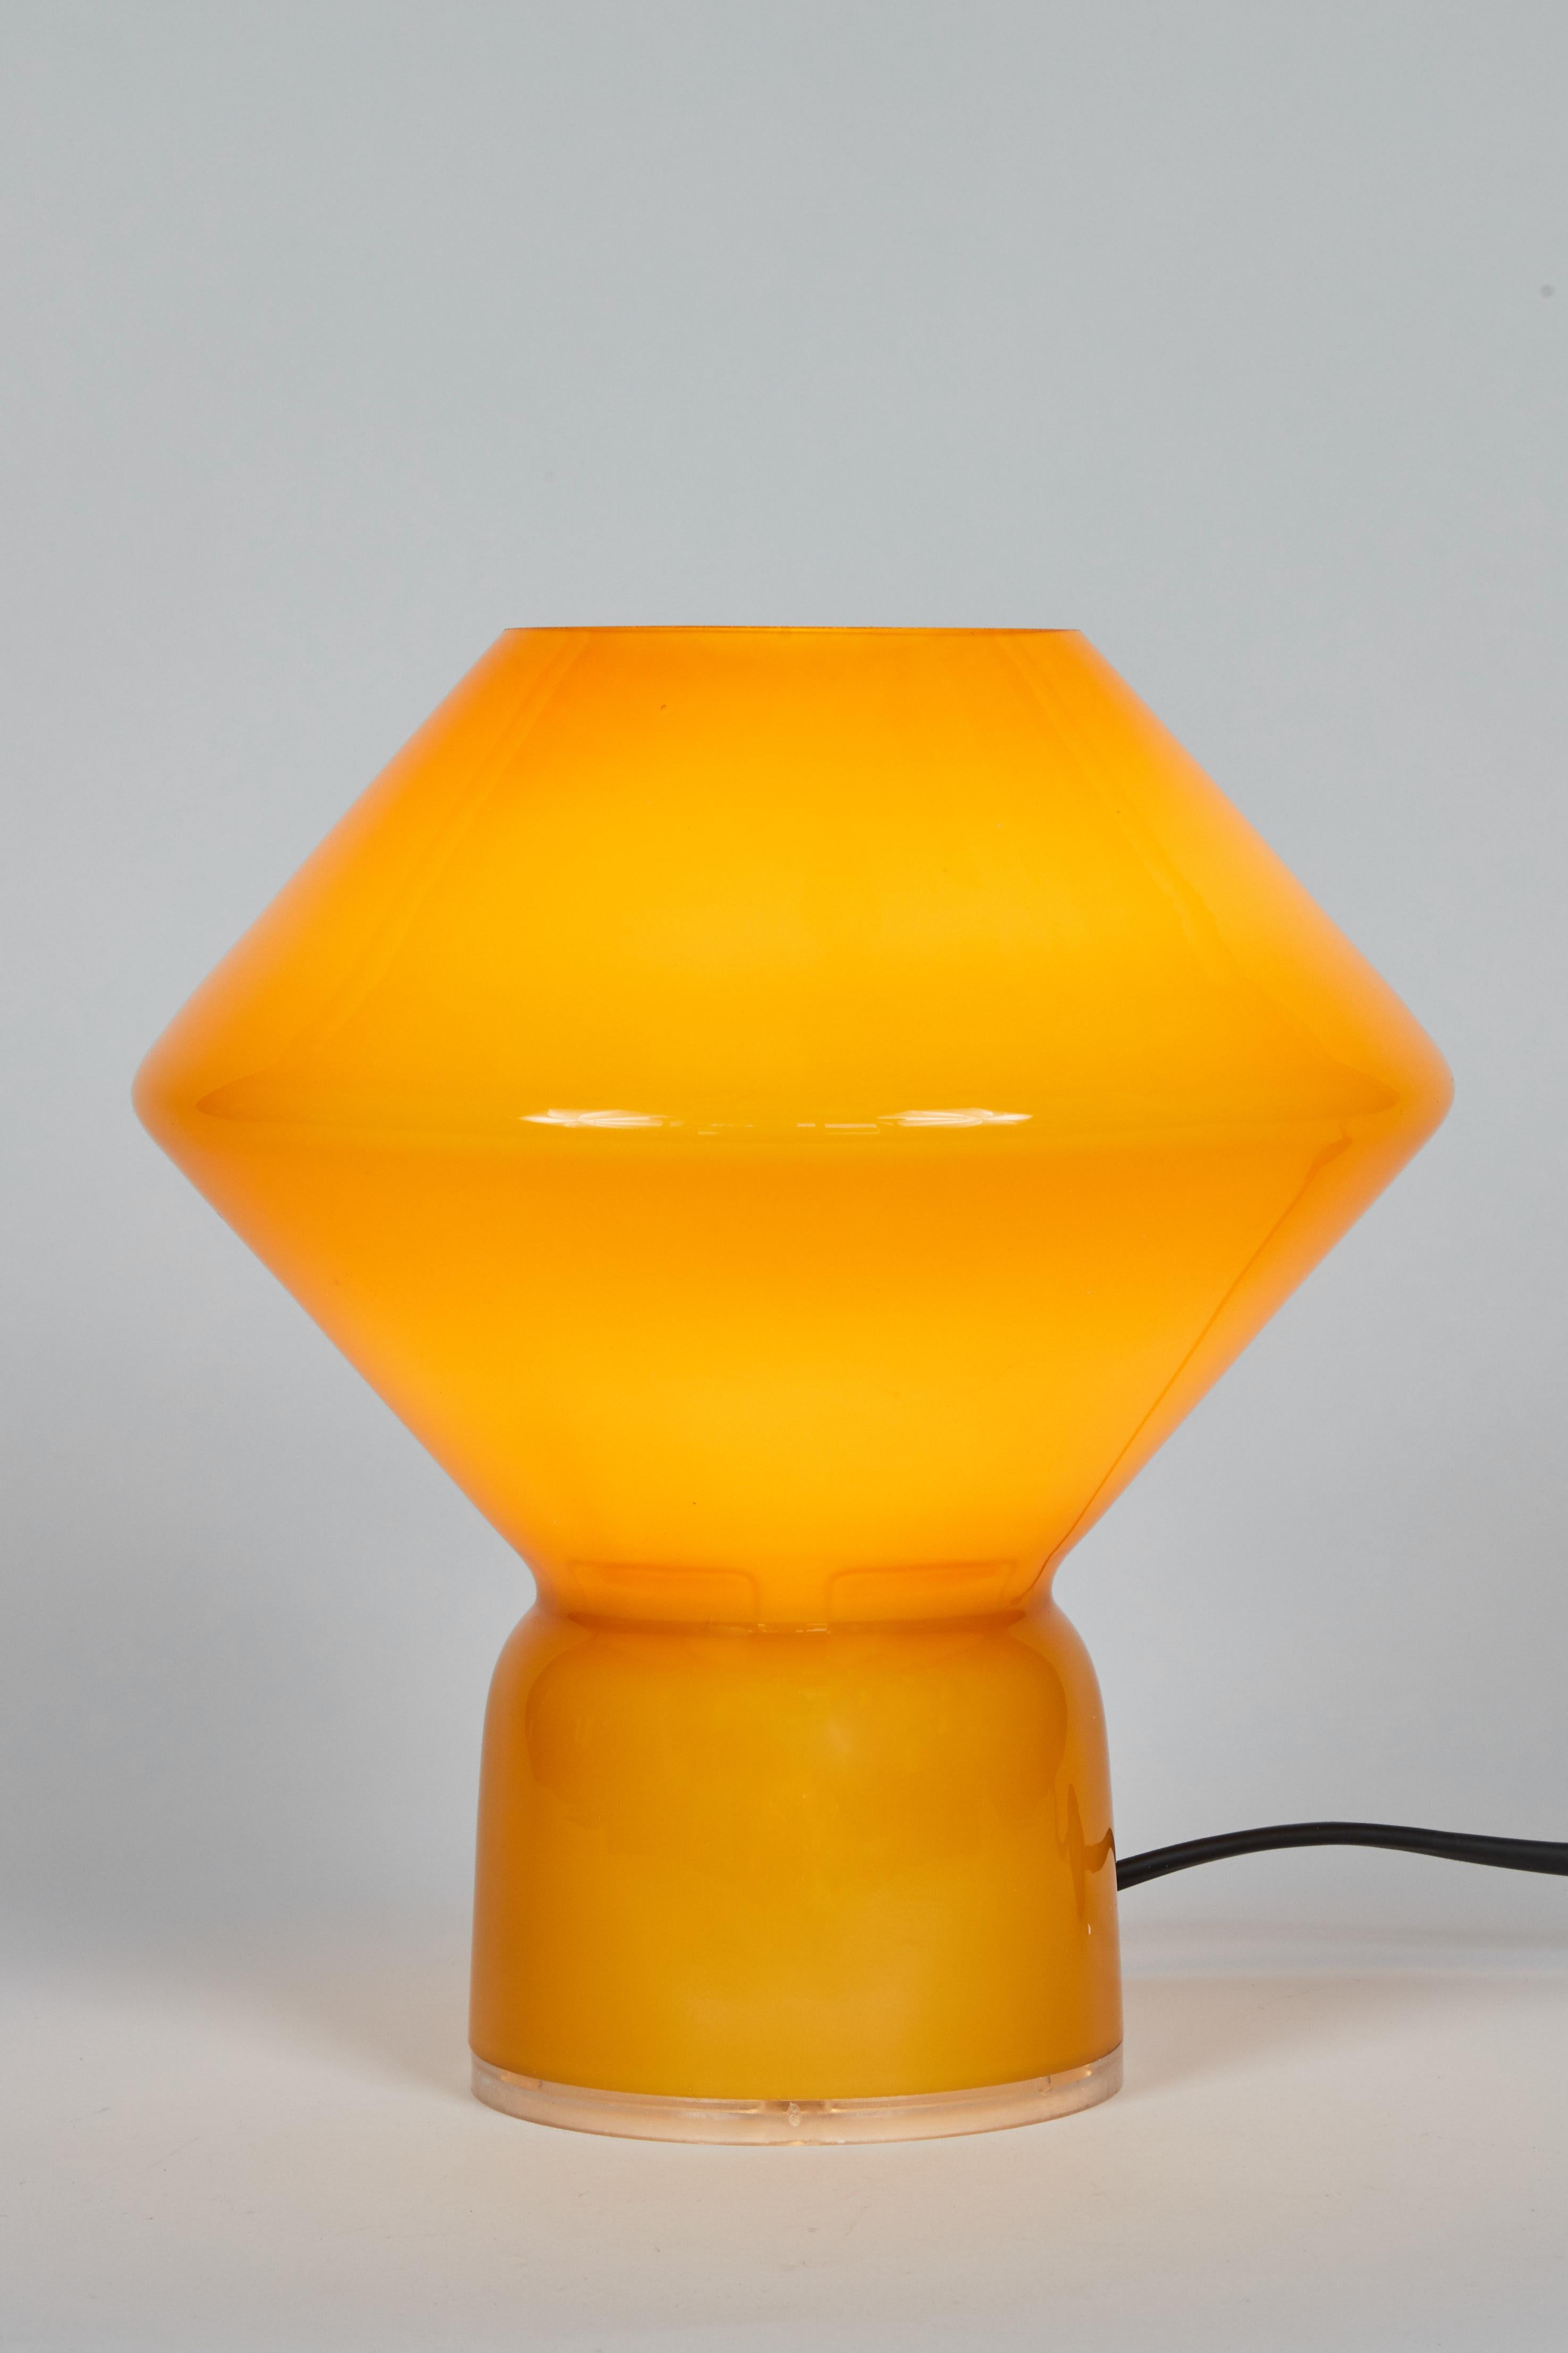 memphis style lamp